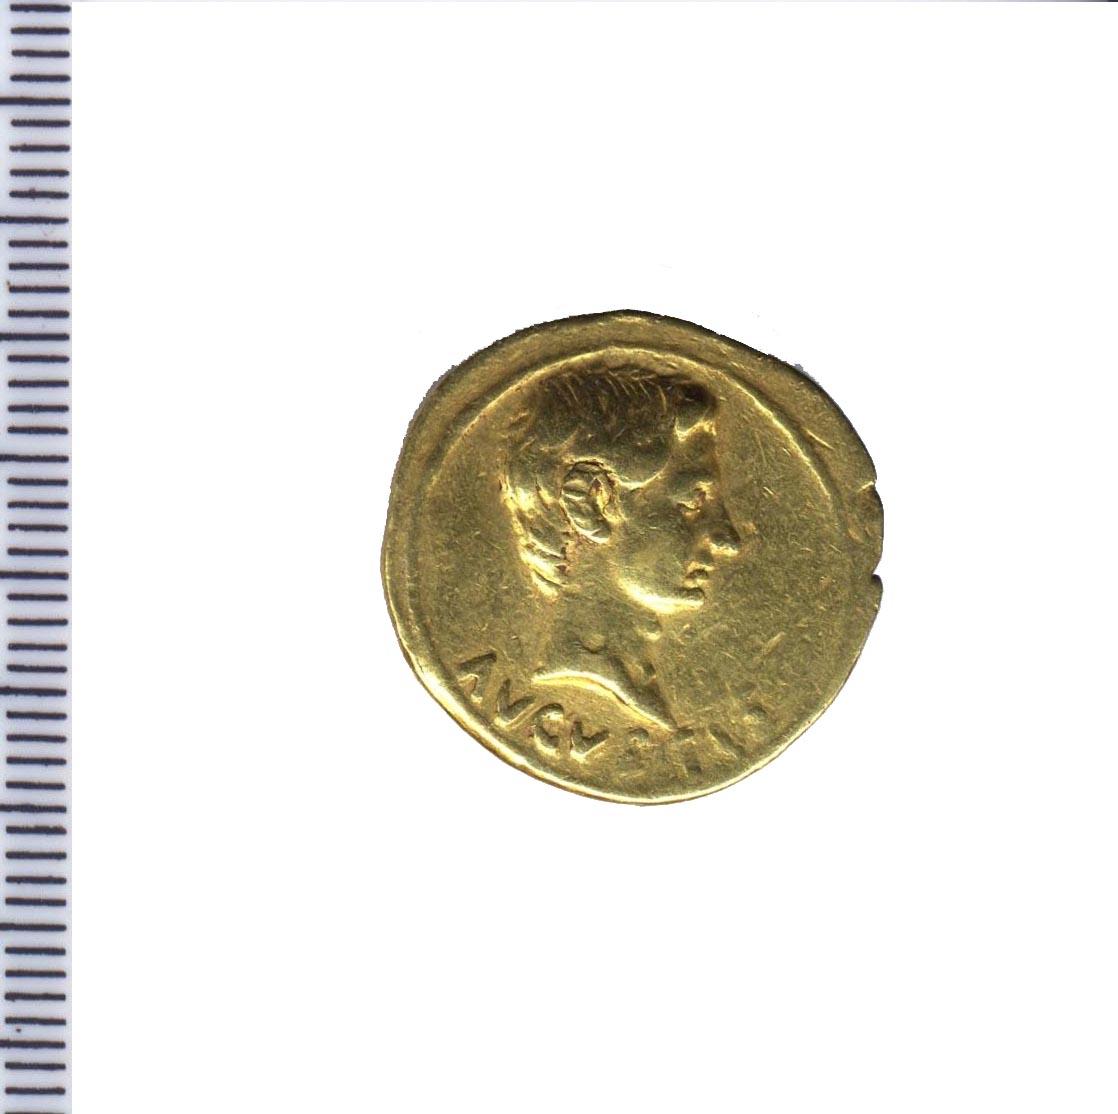 moneta - aureo - produzione romana imperiale (sec. I a.C)